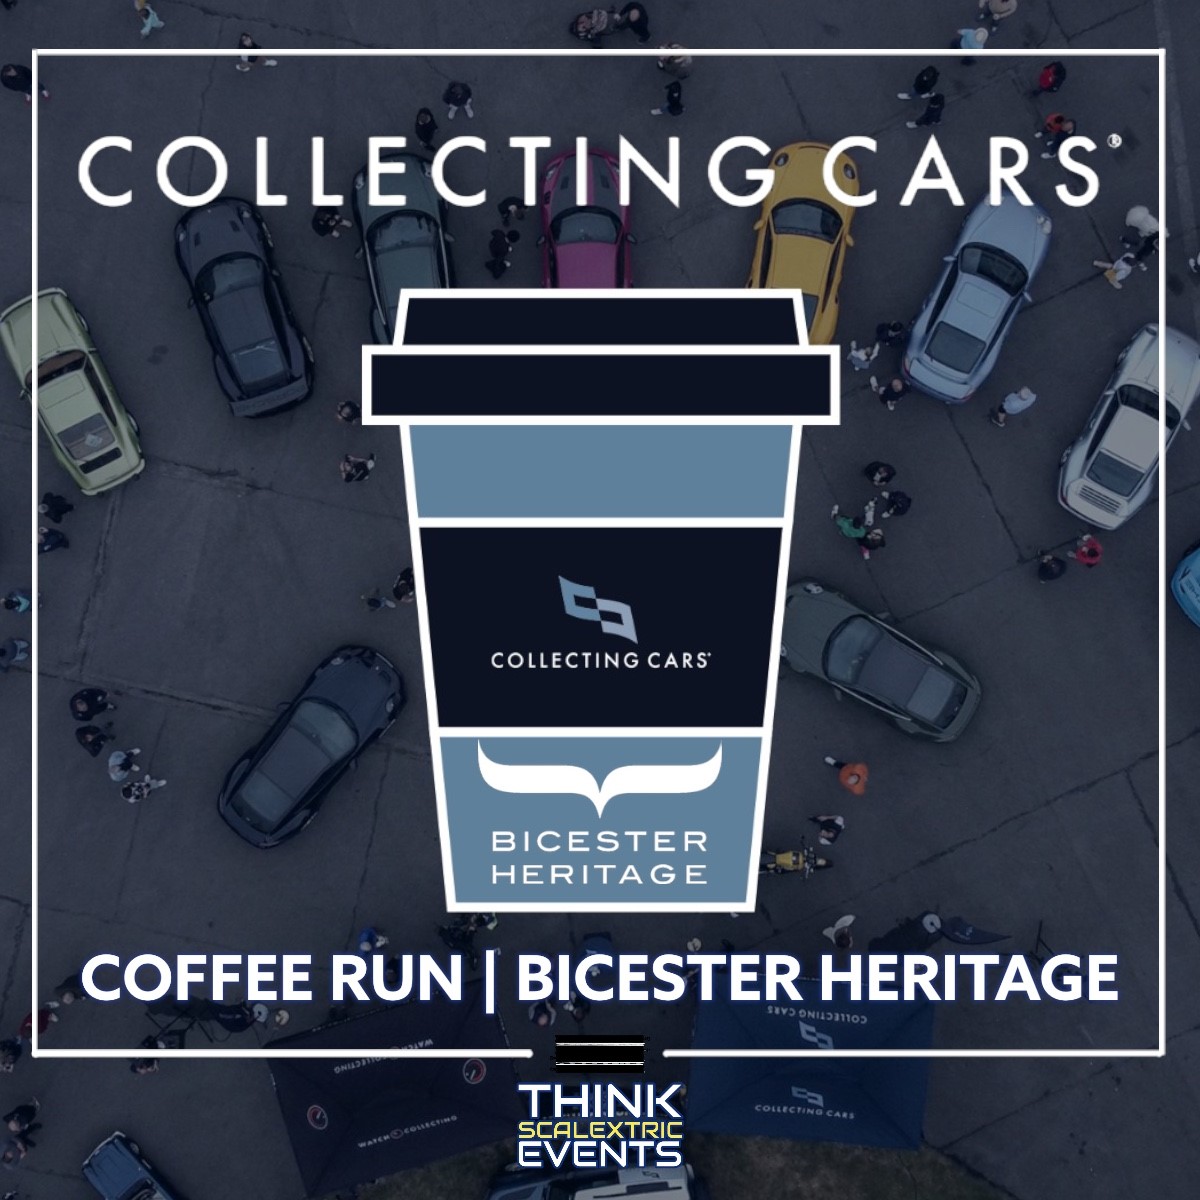  ‘Coffee Run’ at Bicester Heritage